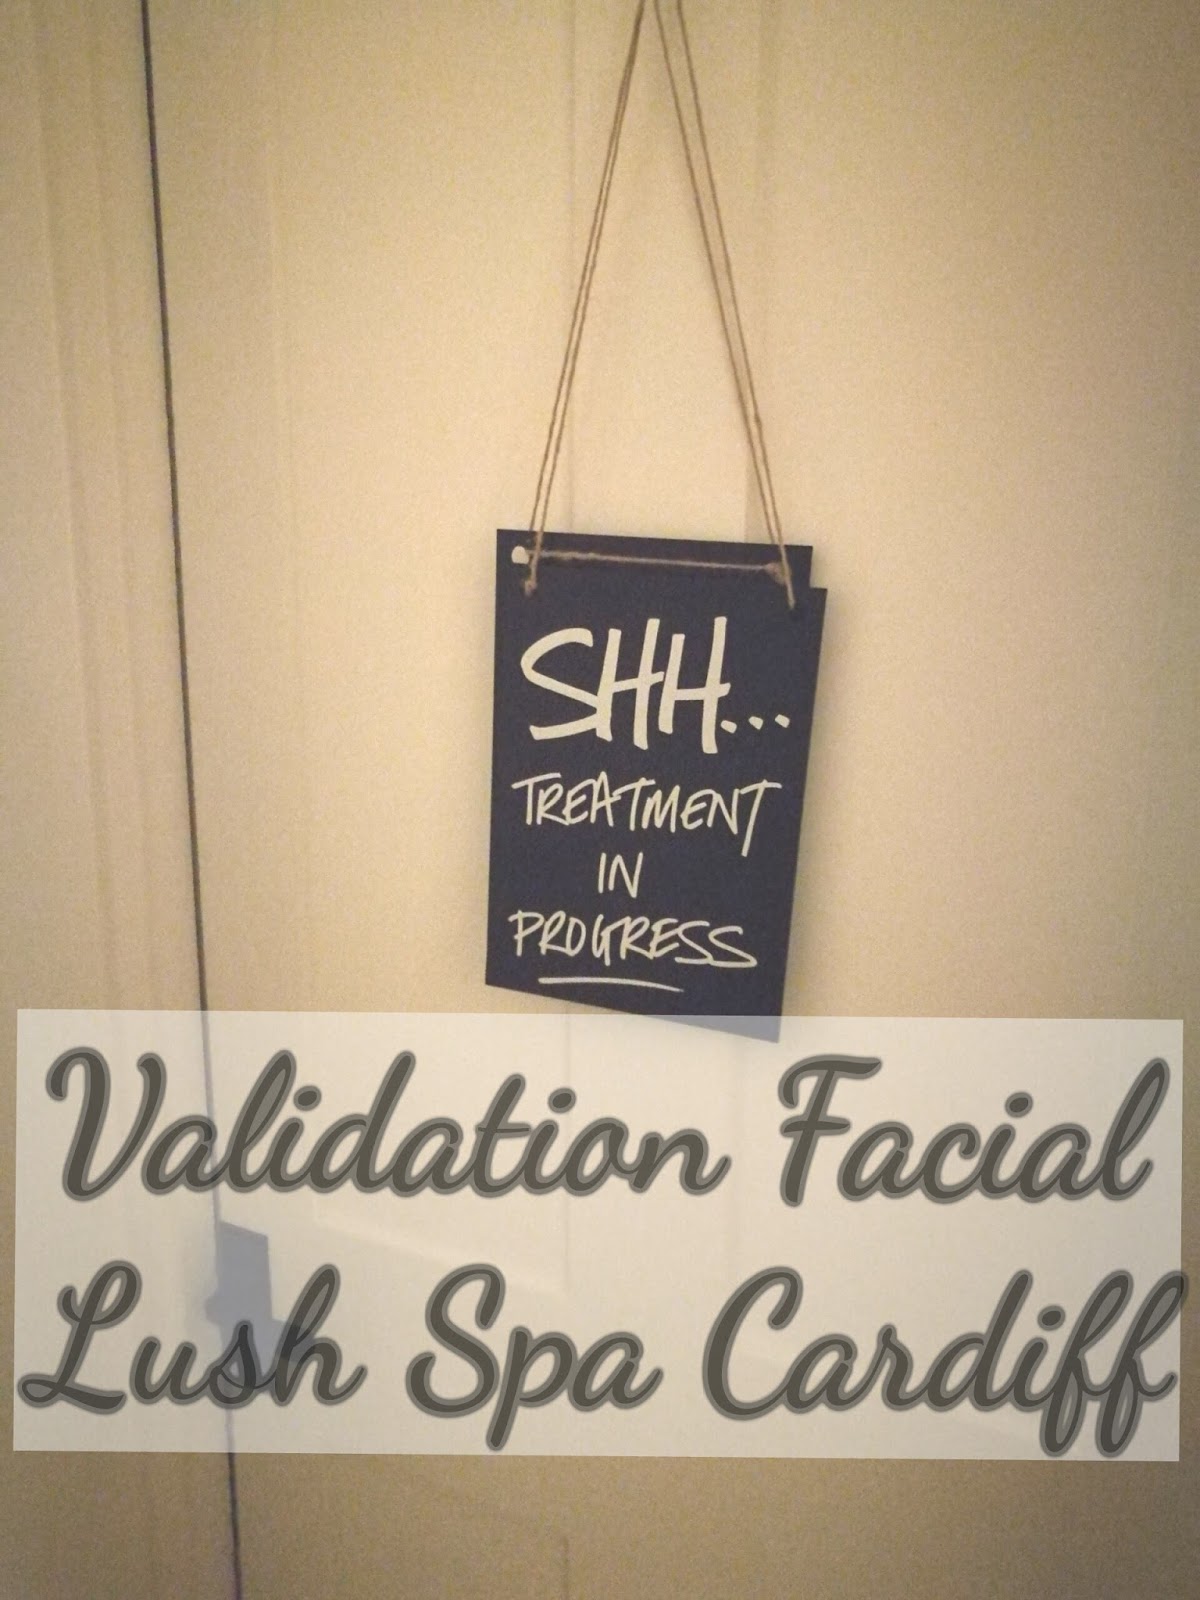 Validation facial - Lush Spa Cardiff